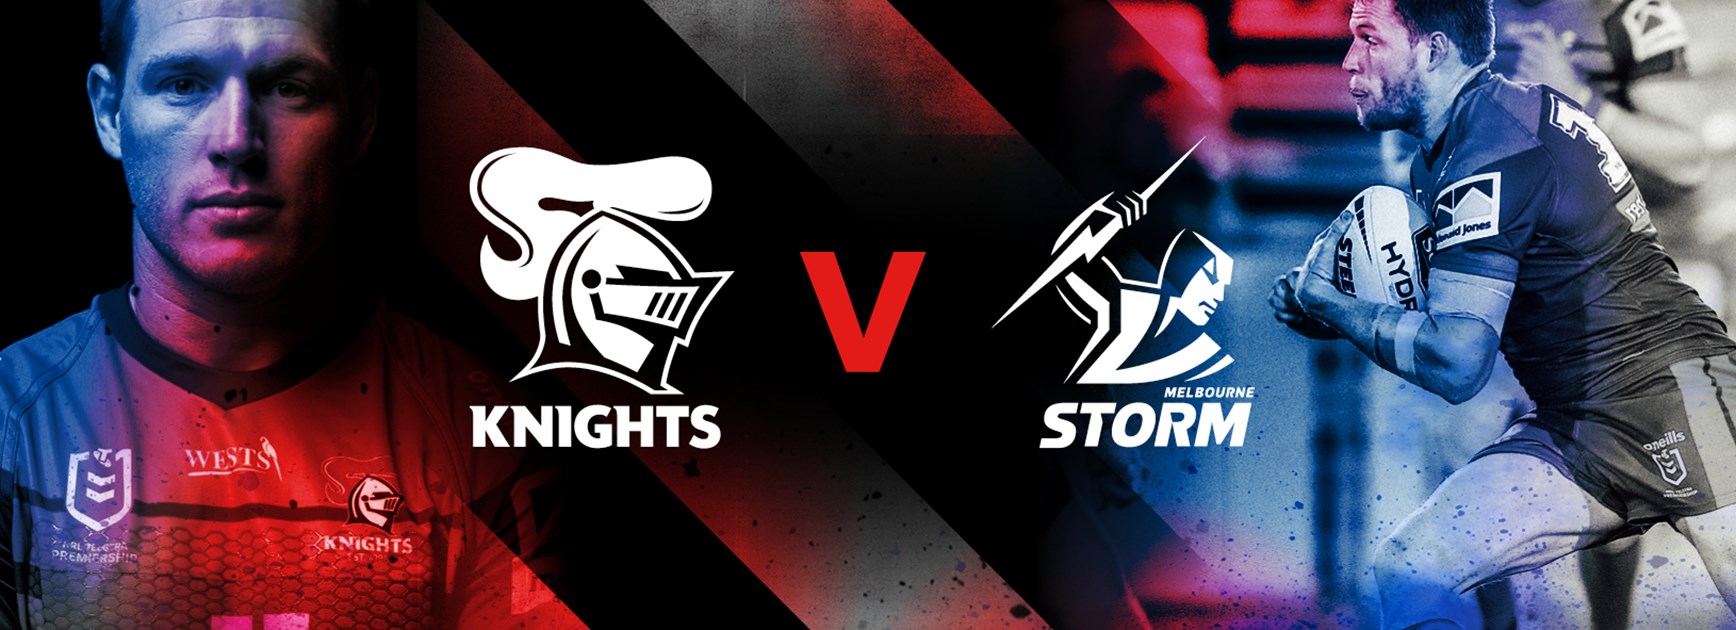 Knights v Storm Round 5 NRL team list